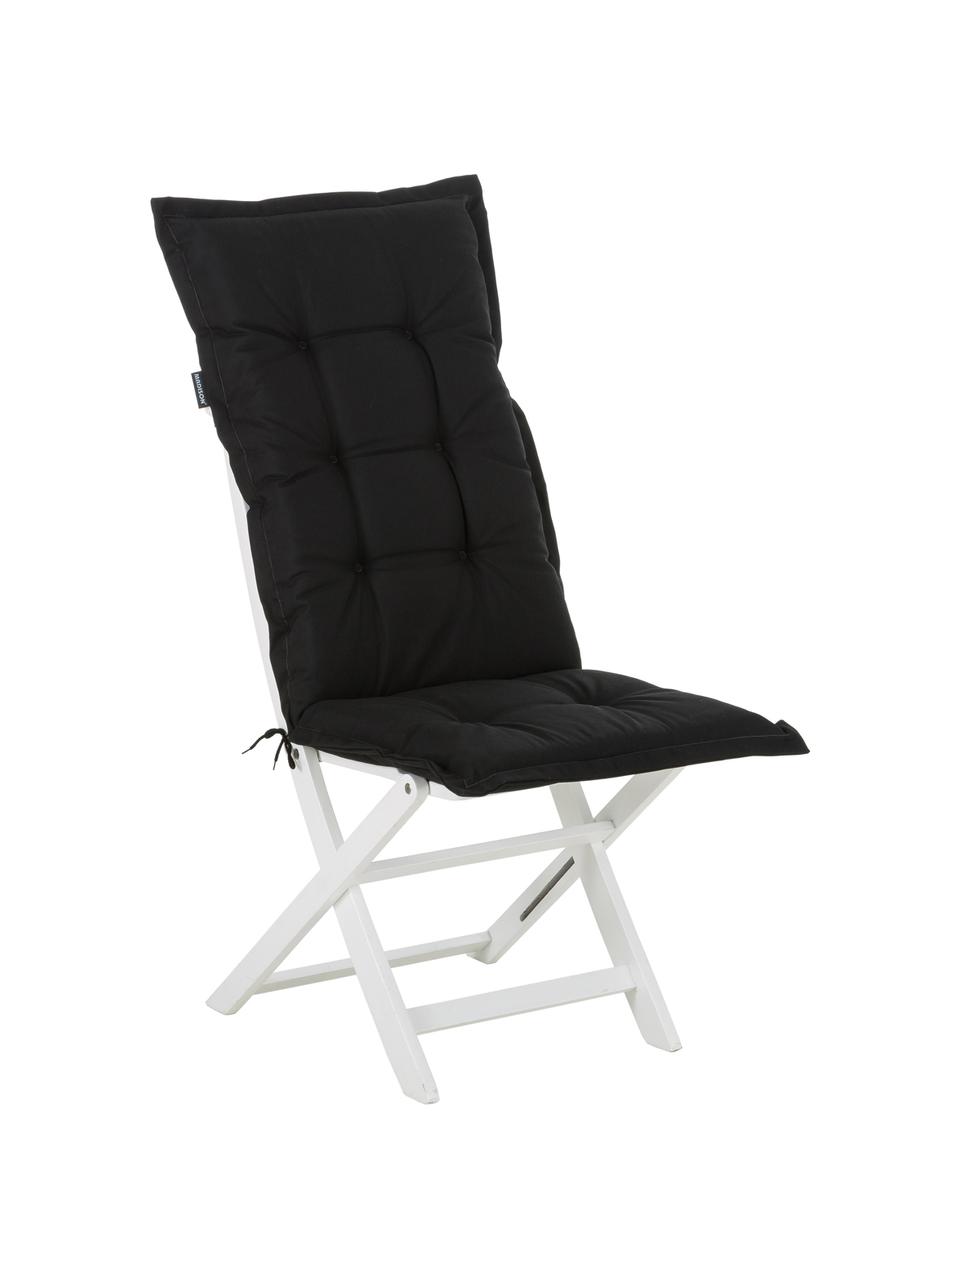 Cojín para silla con respaldo Panama, Funda: 50% algodón, 50% poliéste, Negro, An 50 x L 123 cm